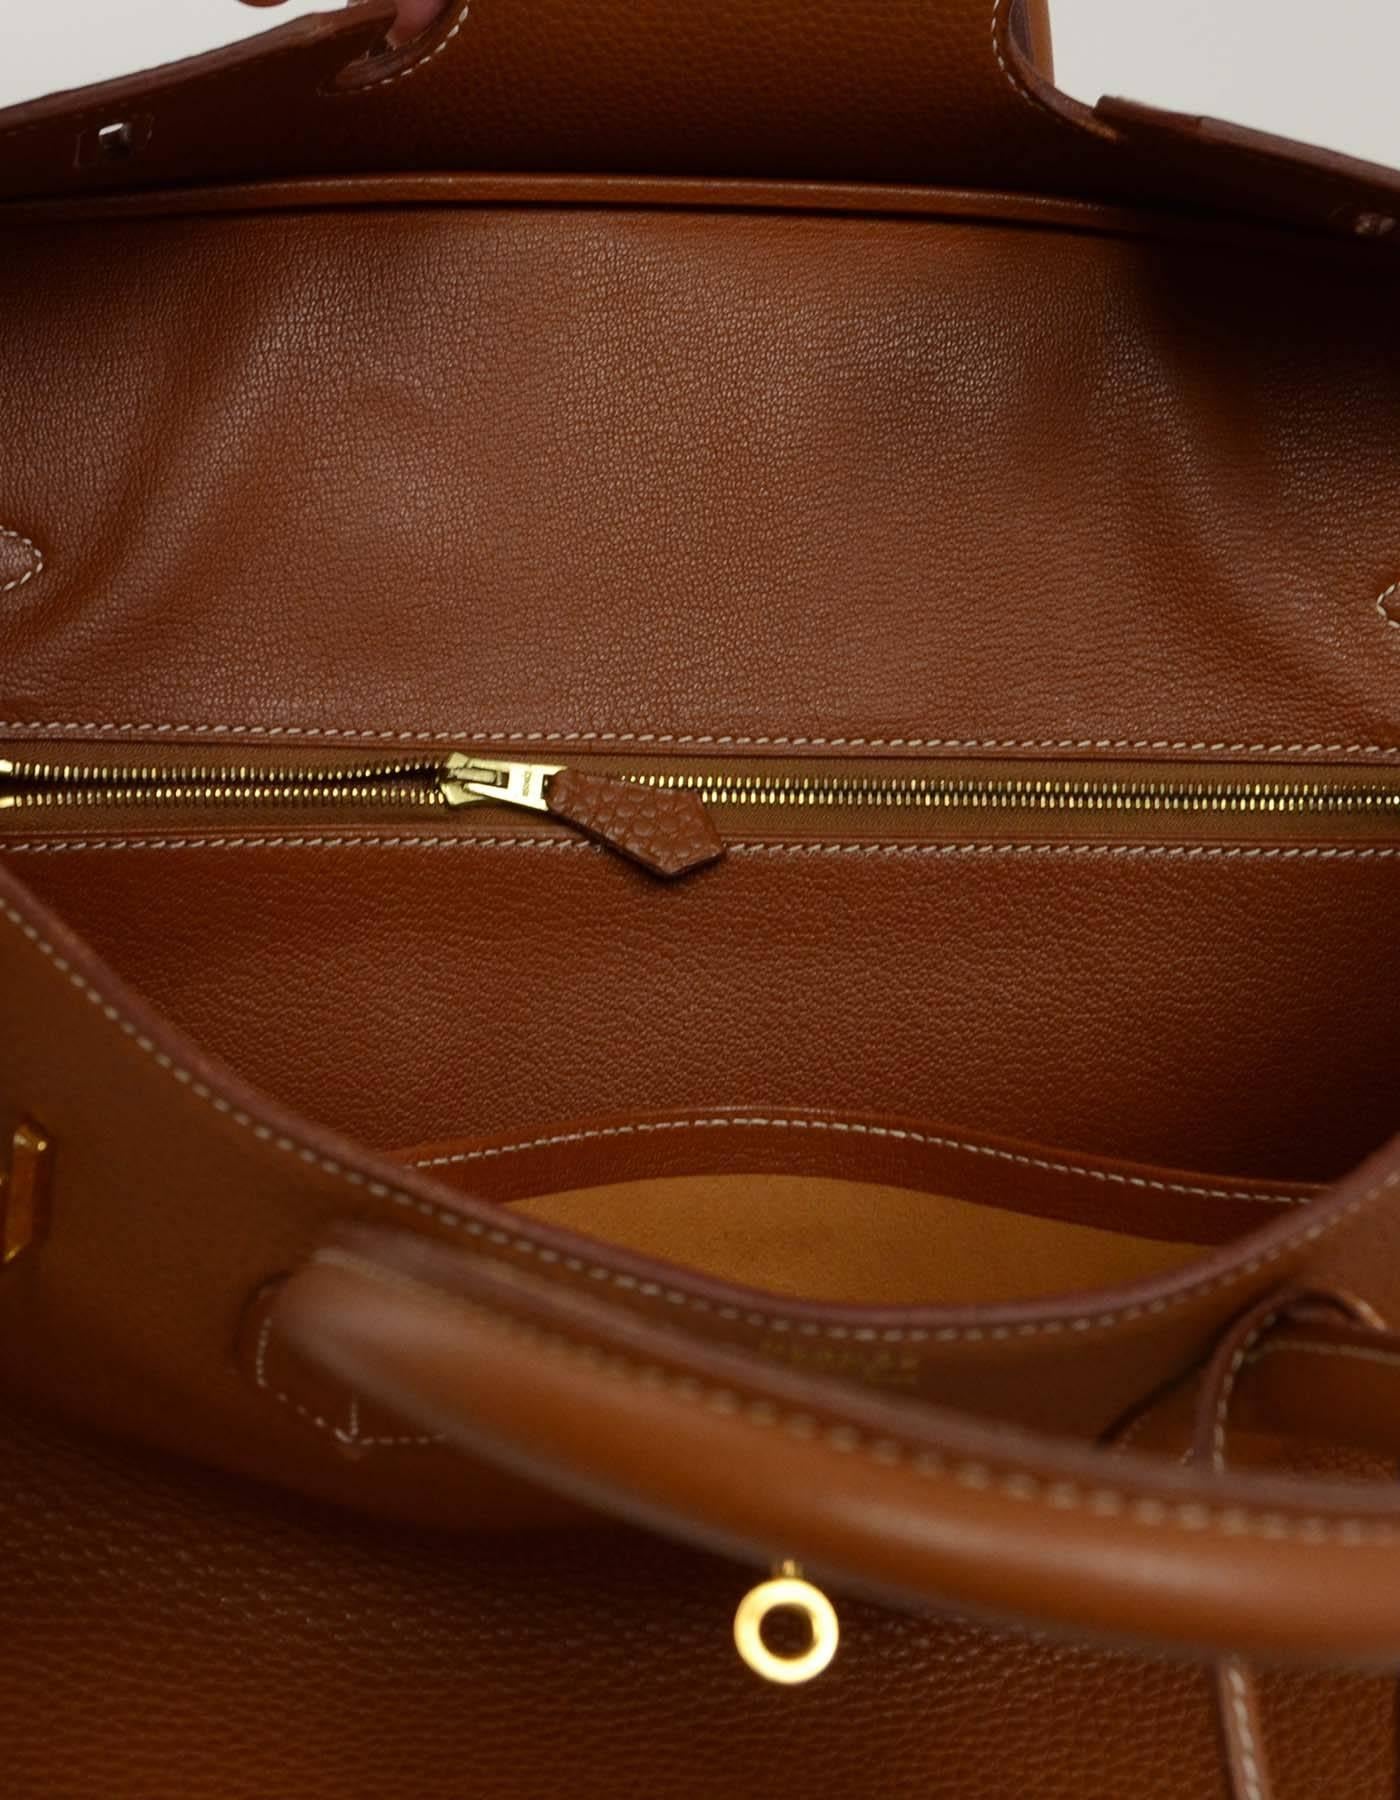 Brown Hermes Gold/Tan Togo Leather 35cm Birkin Bag w/ Box & Dust Bag